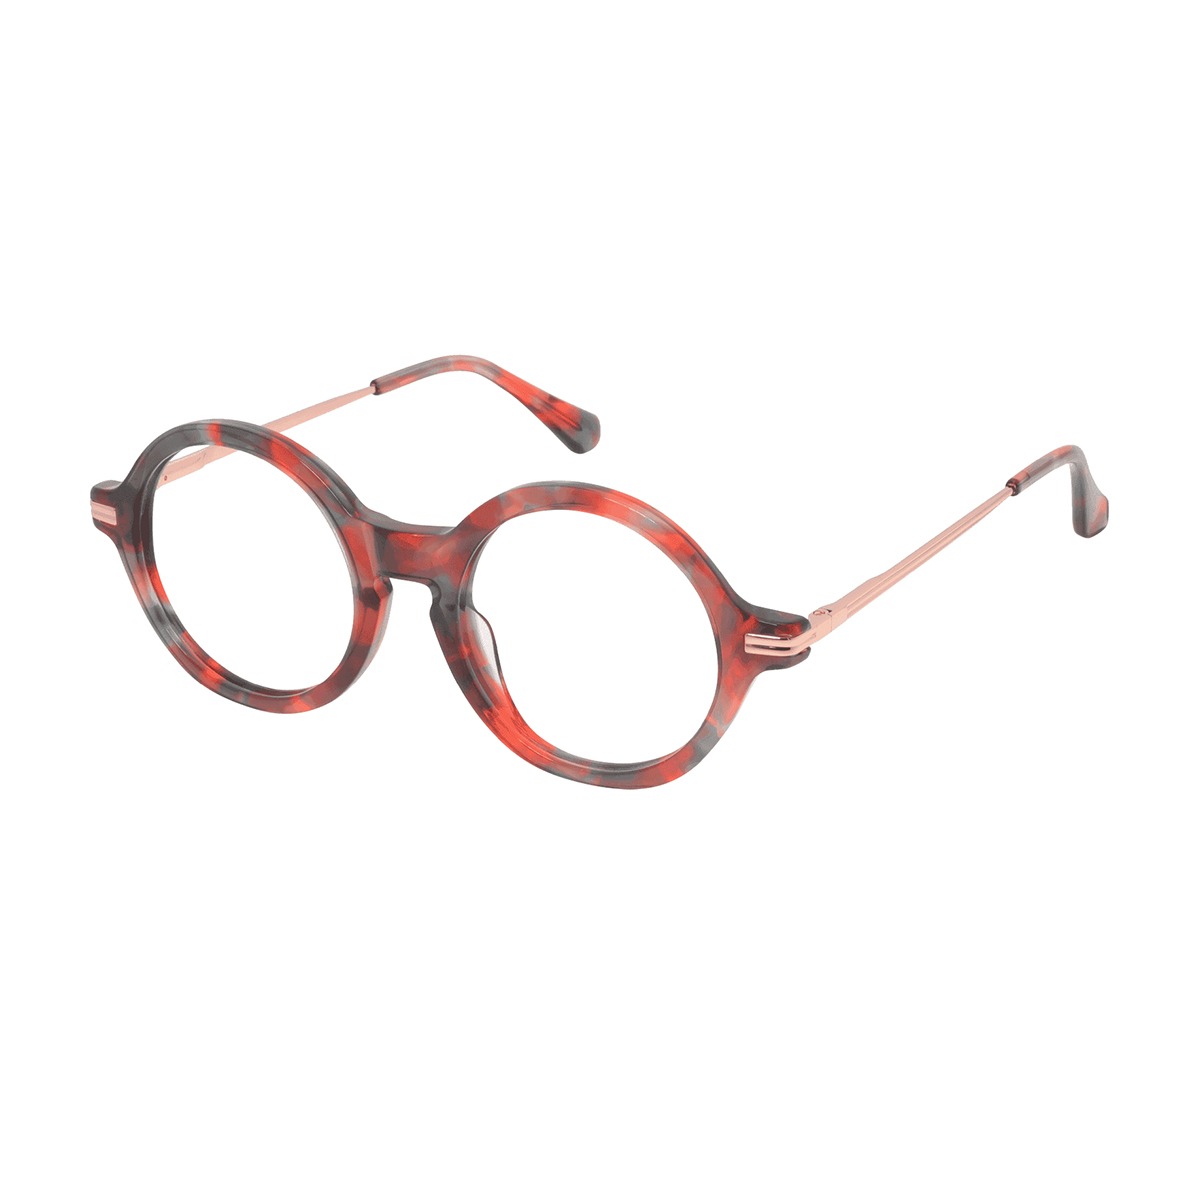 Glaucus - Round Red-Demi Reading Glasses for Men & Women